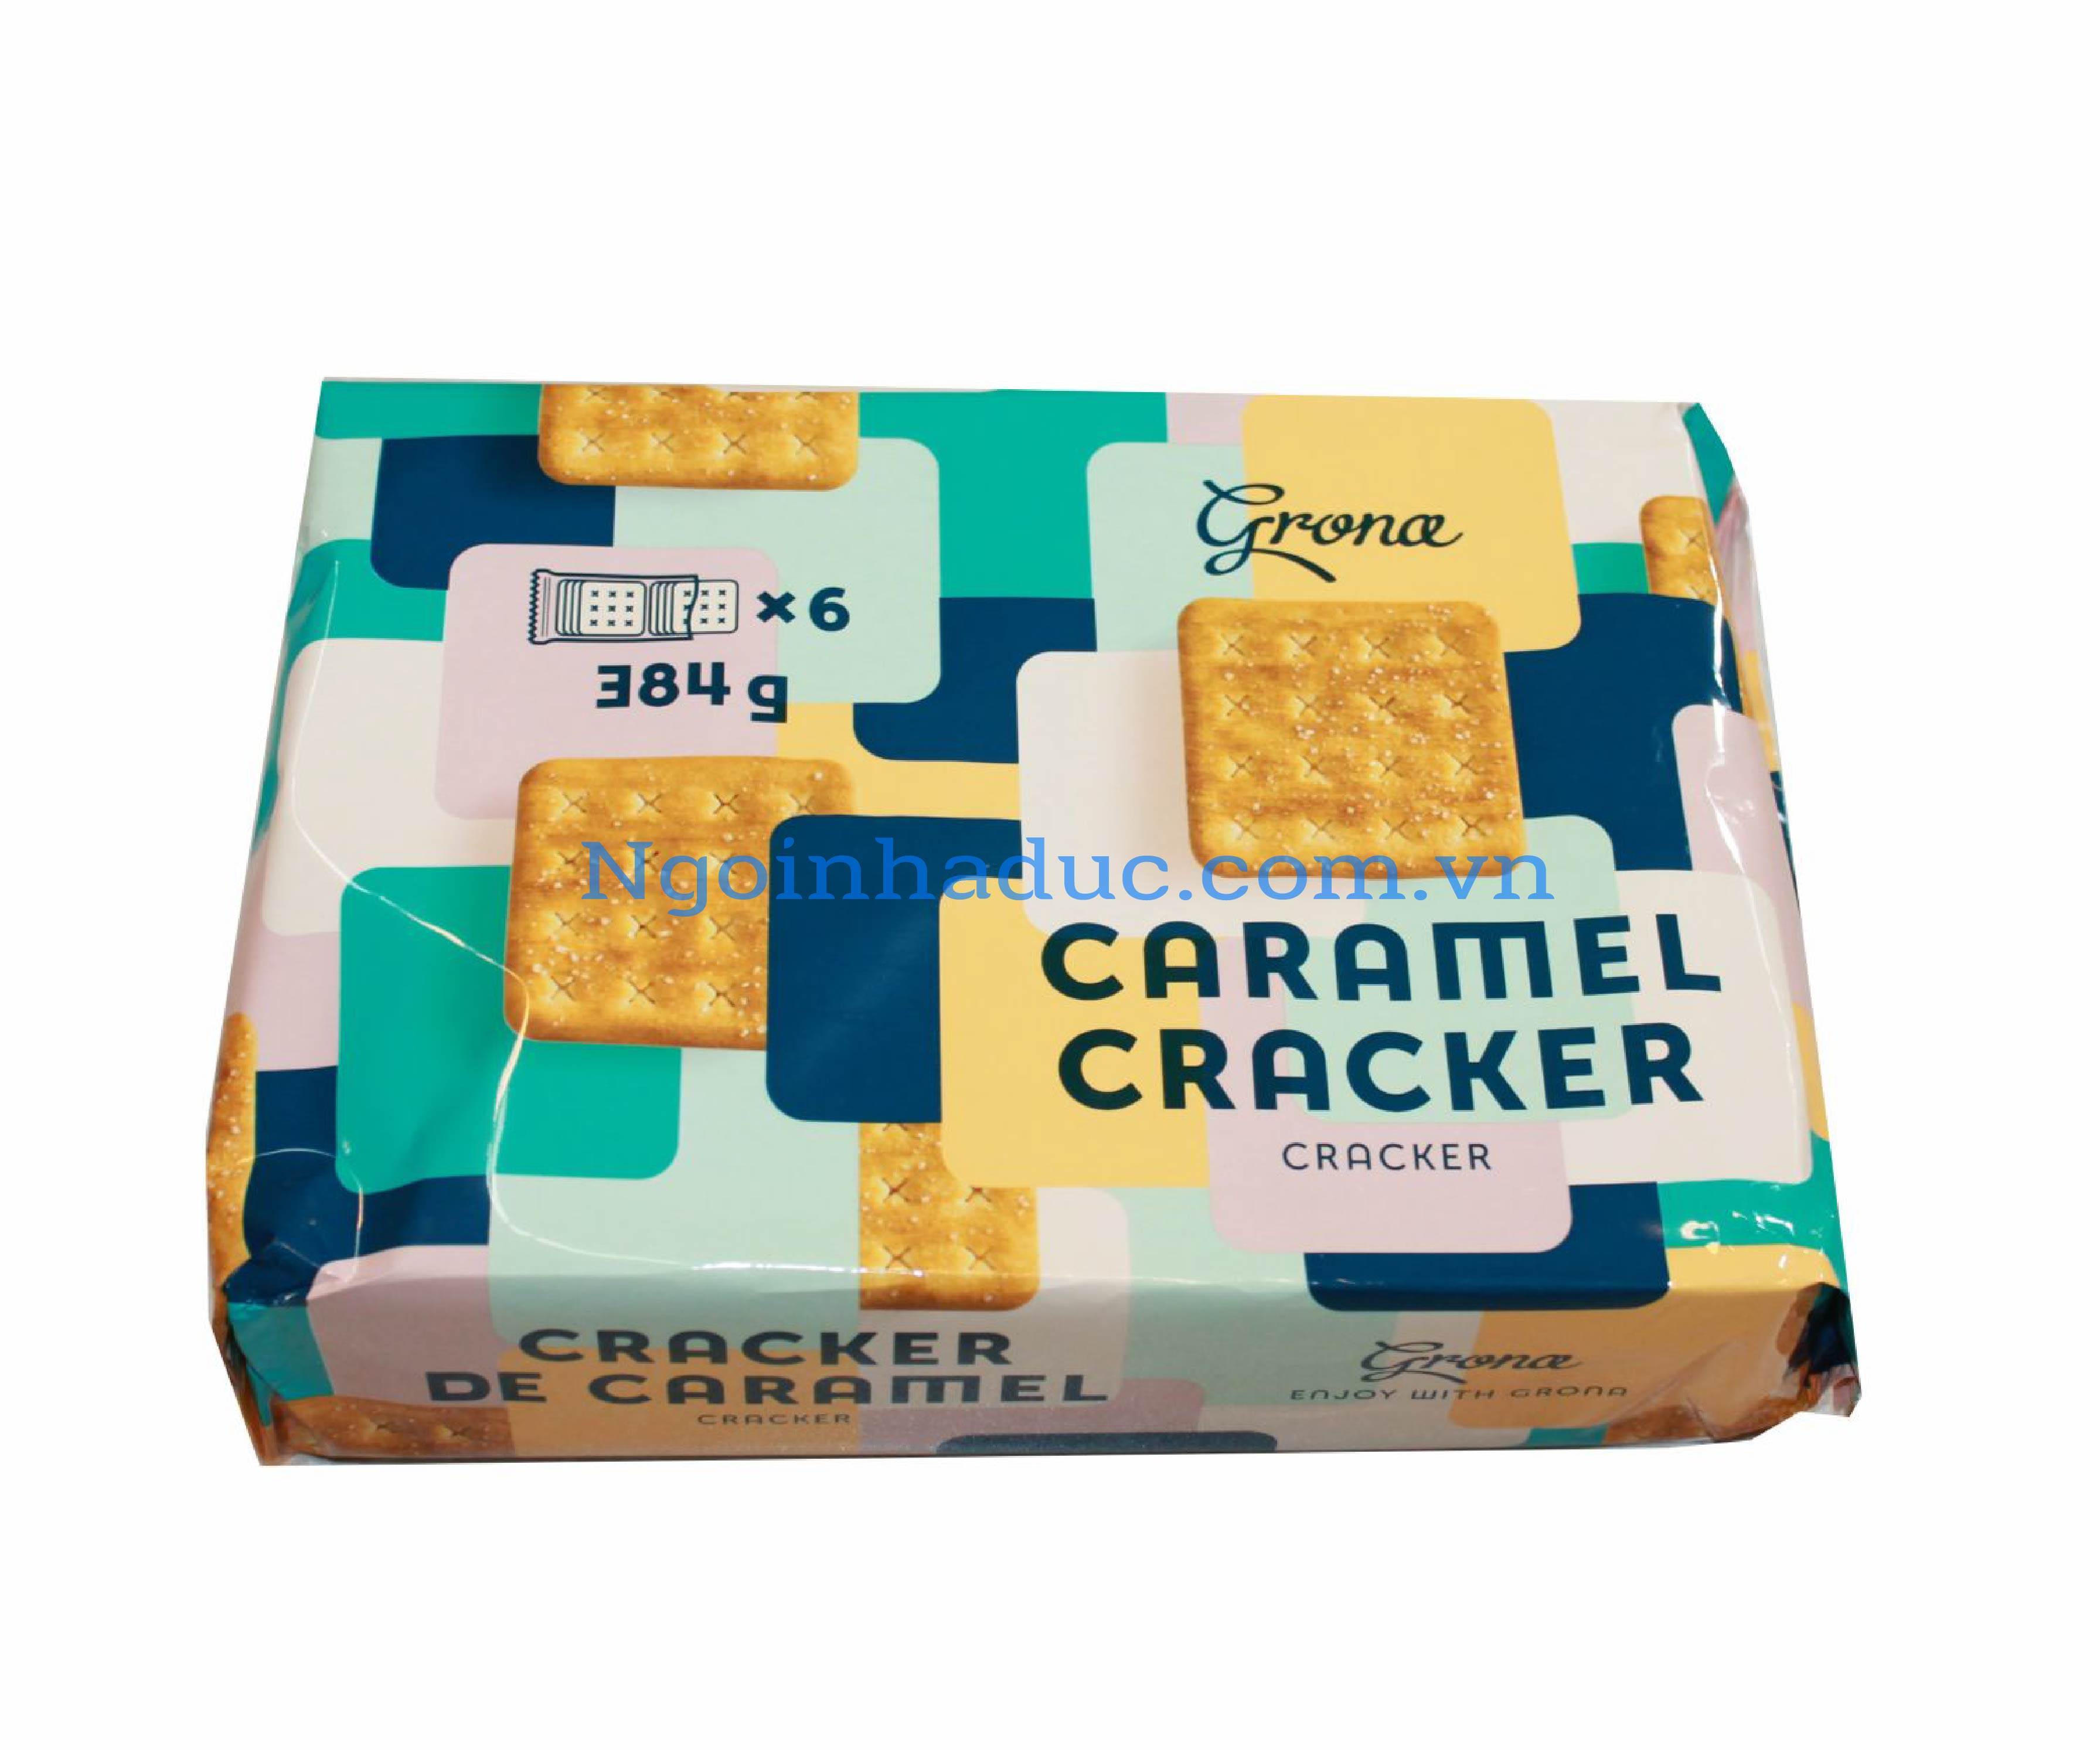 Bánh quy Cracker Grona Caramel 384g (Nga)